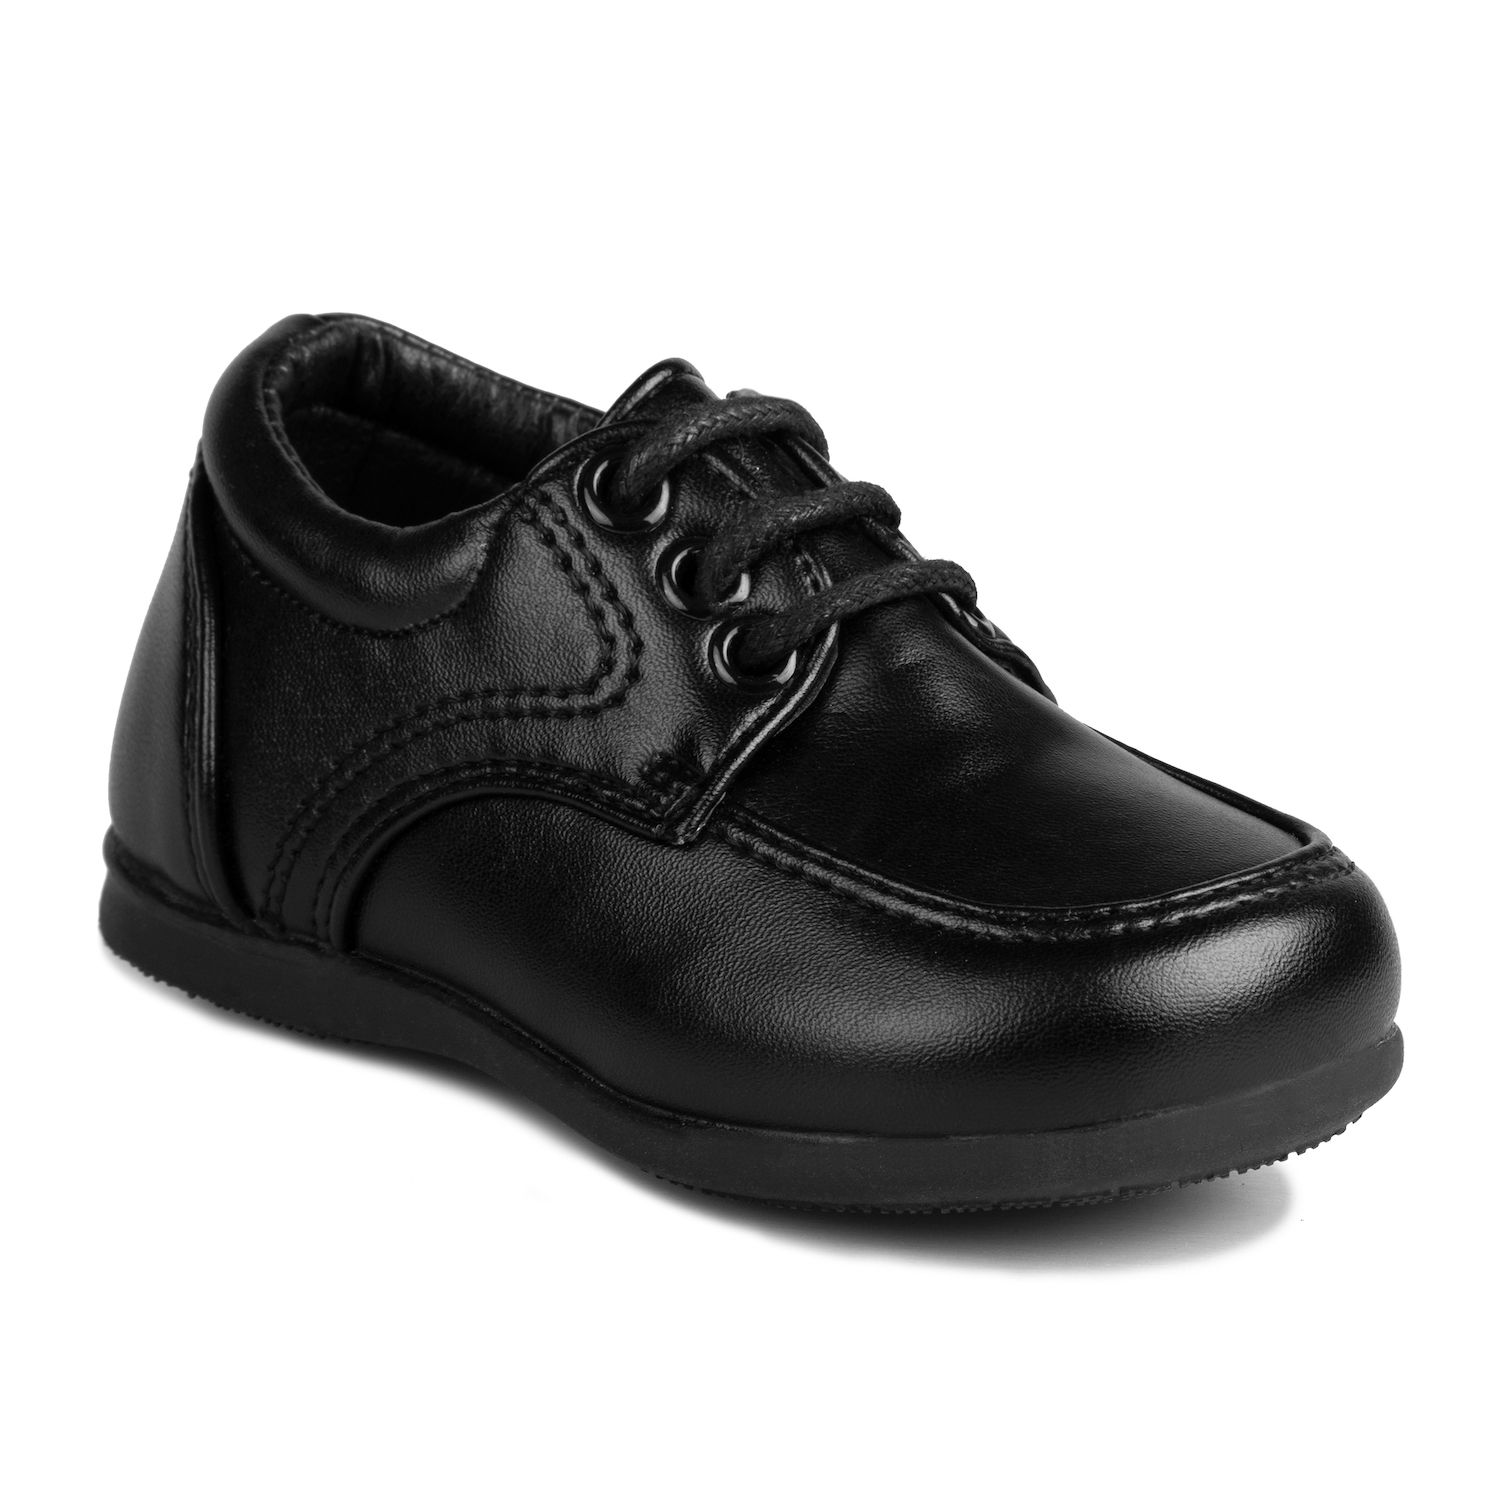 black dress shoes for boys